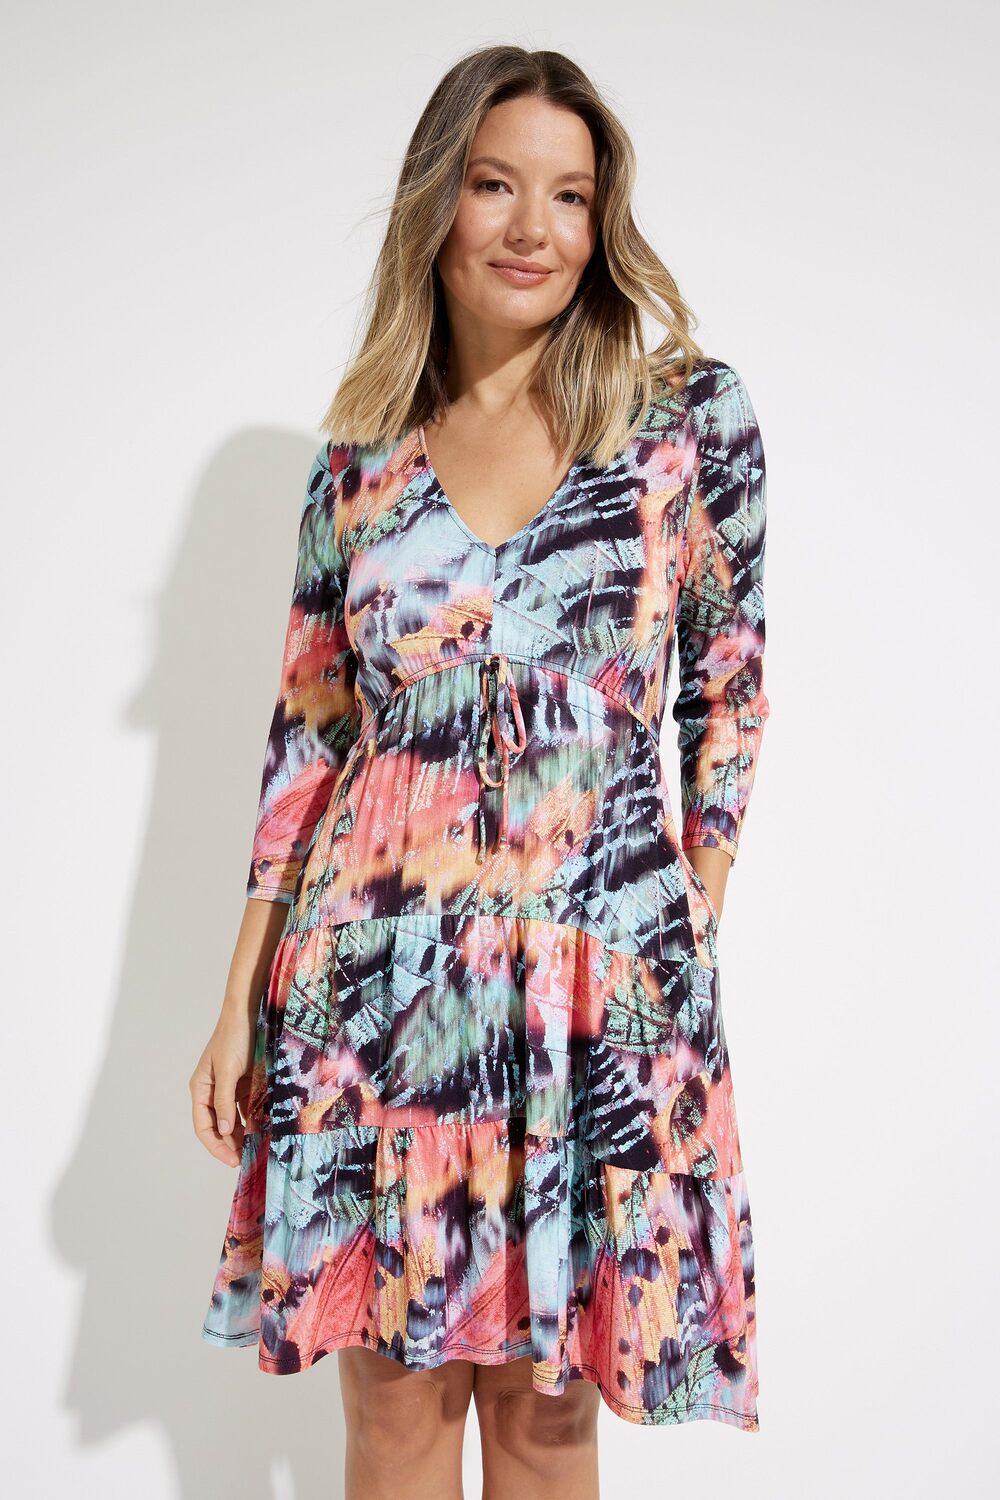 Tropical Print Dress Style 231225. Black/multi